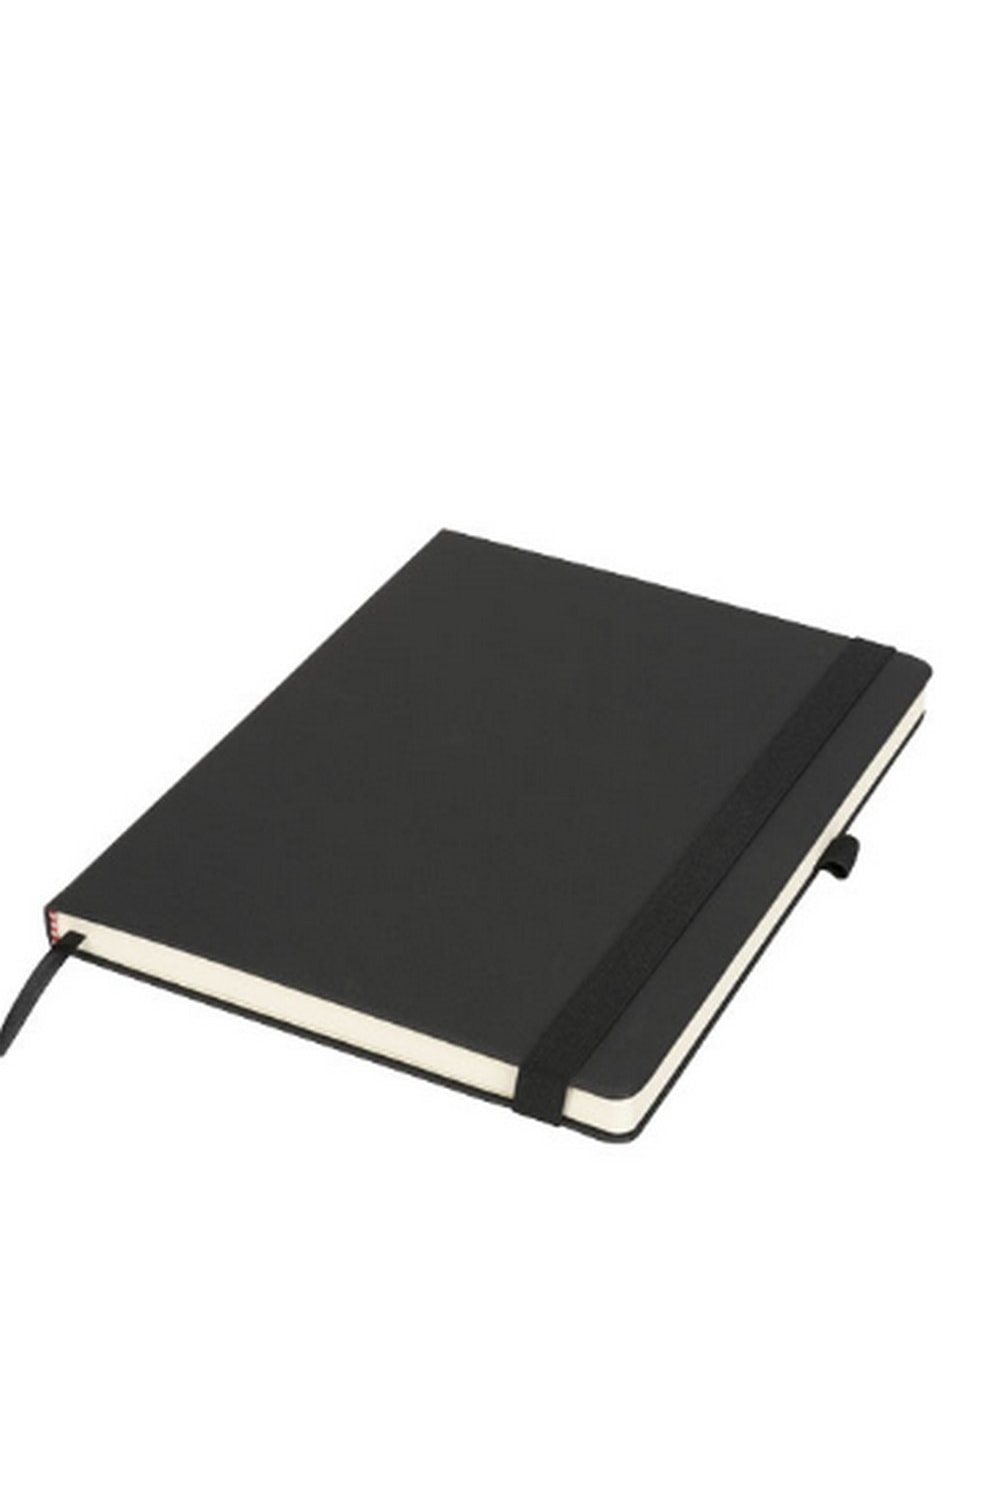 Rivista notebook large (Solid Black) (Large)